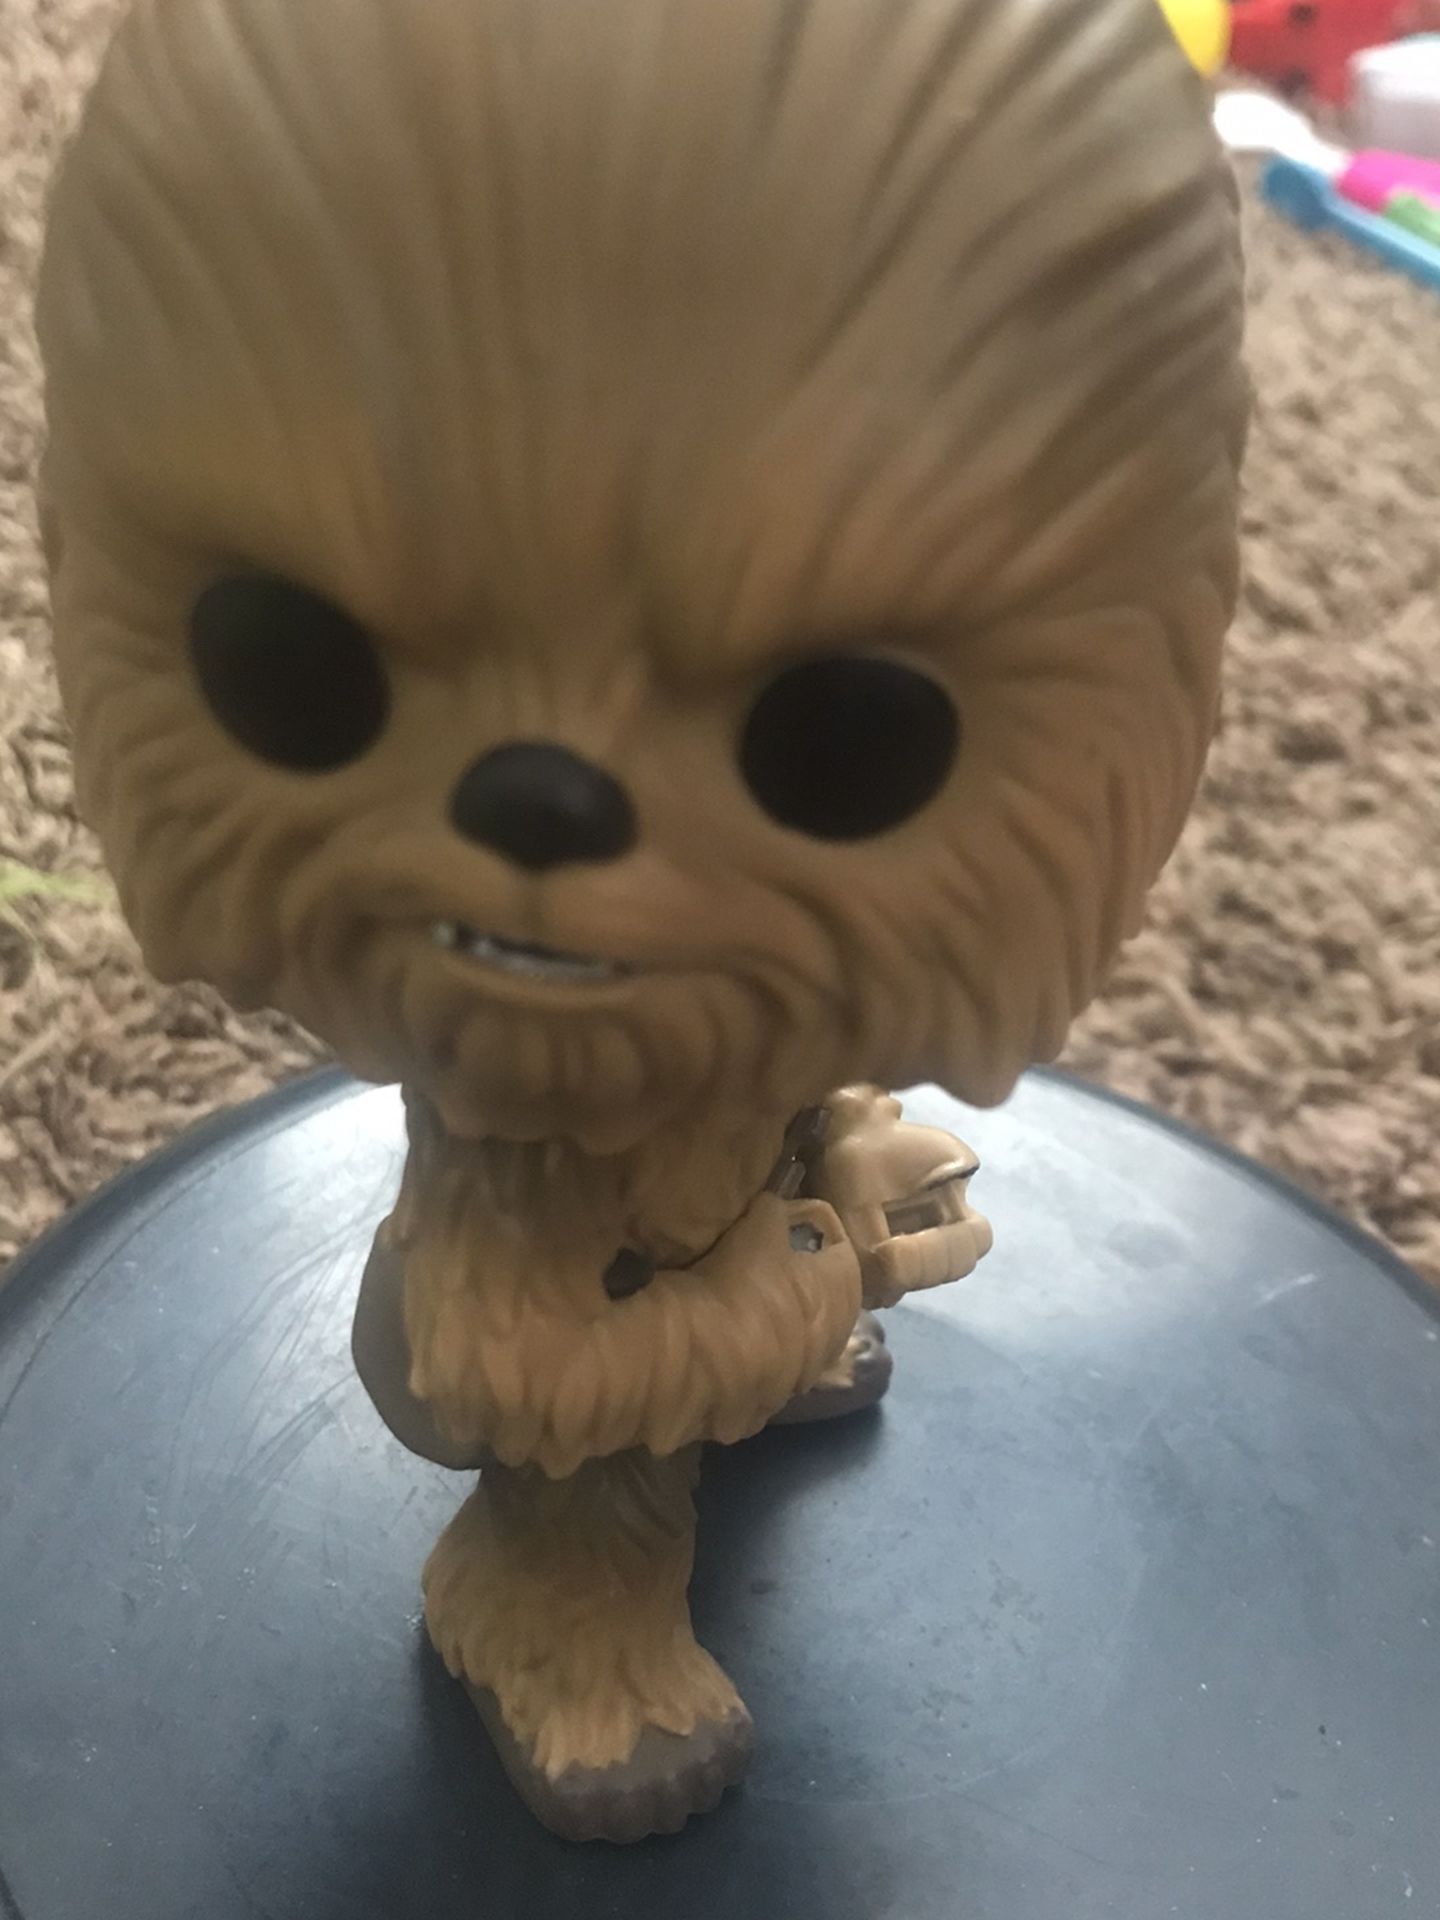 Star Wars Chewbacca Bobble Head Figure